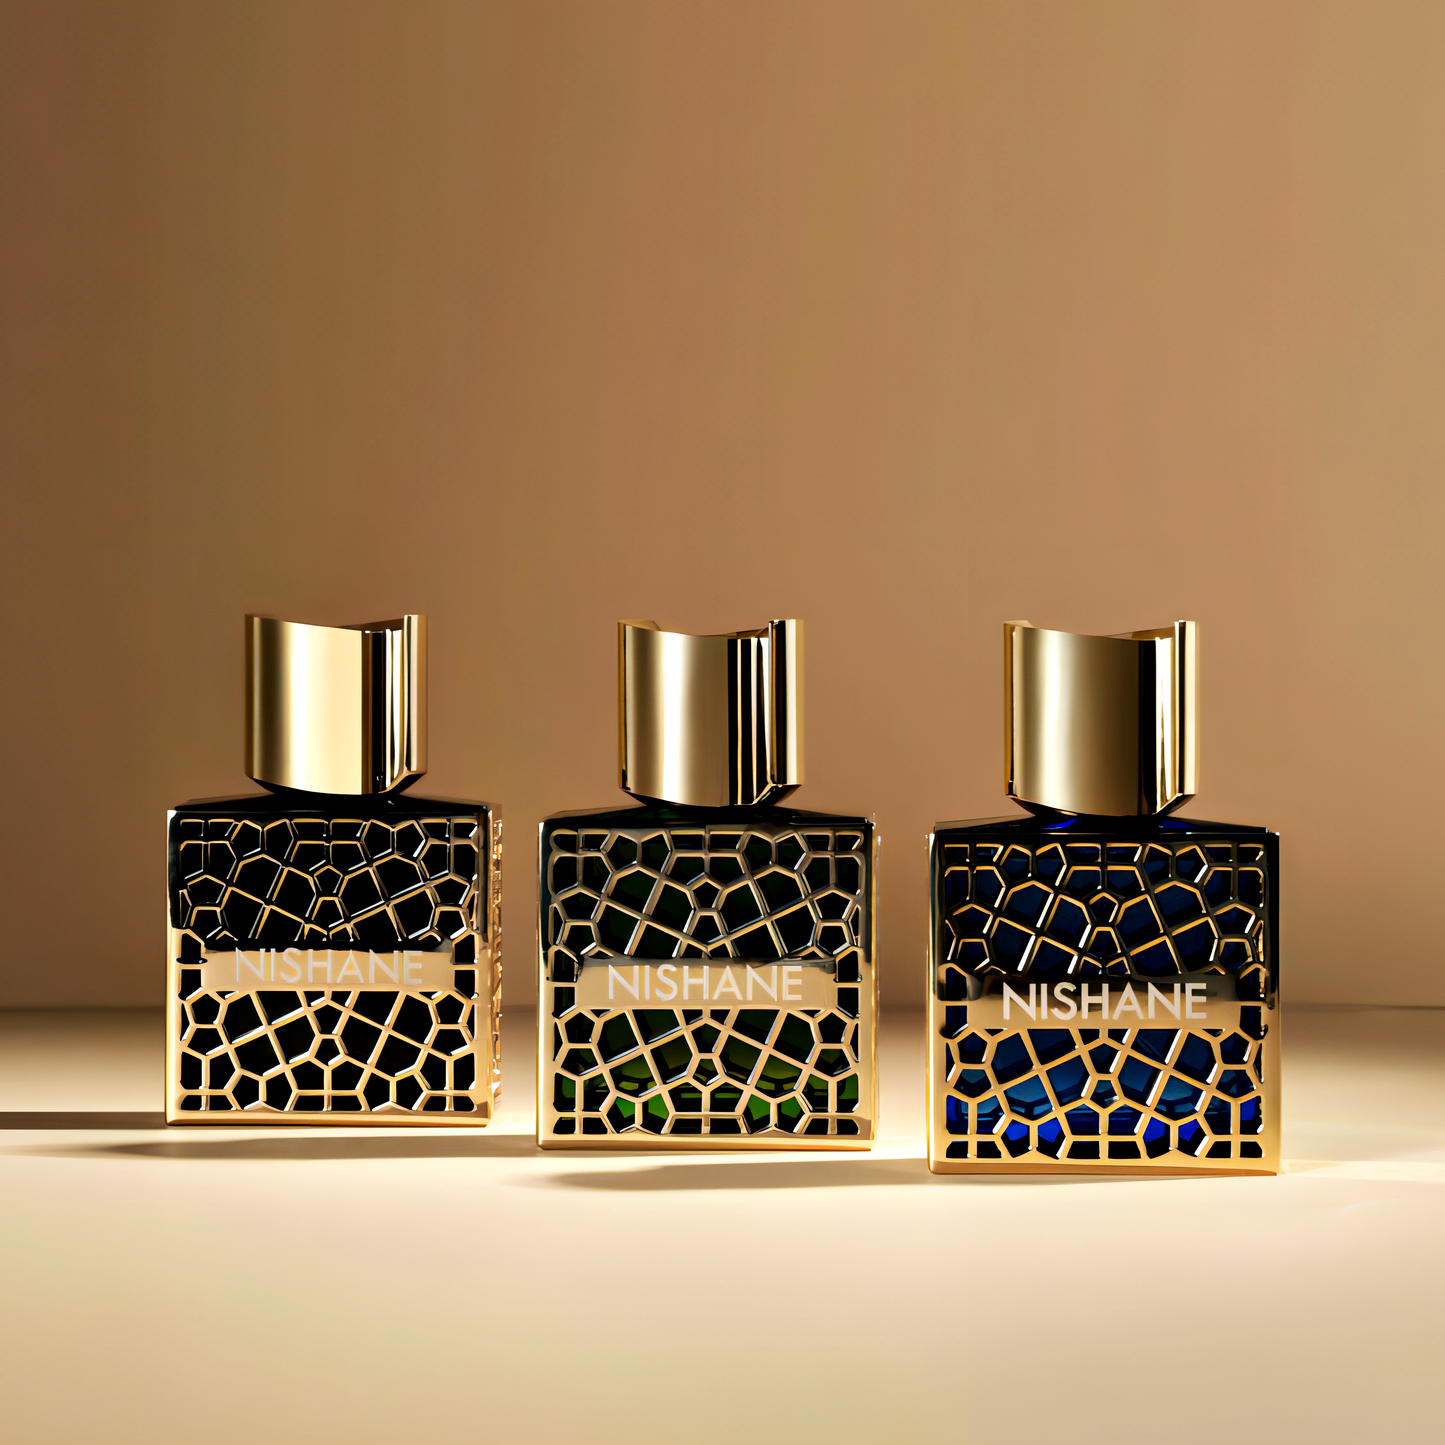 Prestige Collection Nishane Extrait de Parfum 50 ml - Tuxedo.no - Oslo Norway nettbutikk